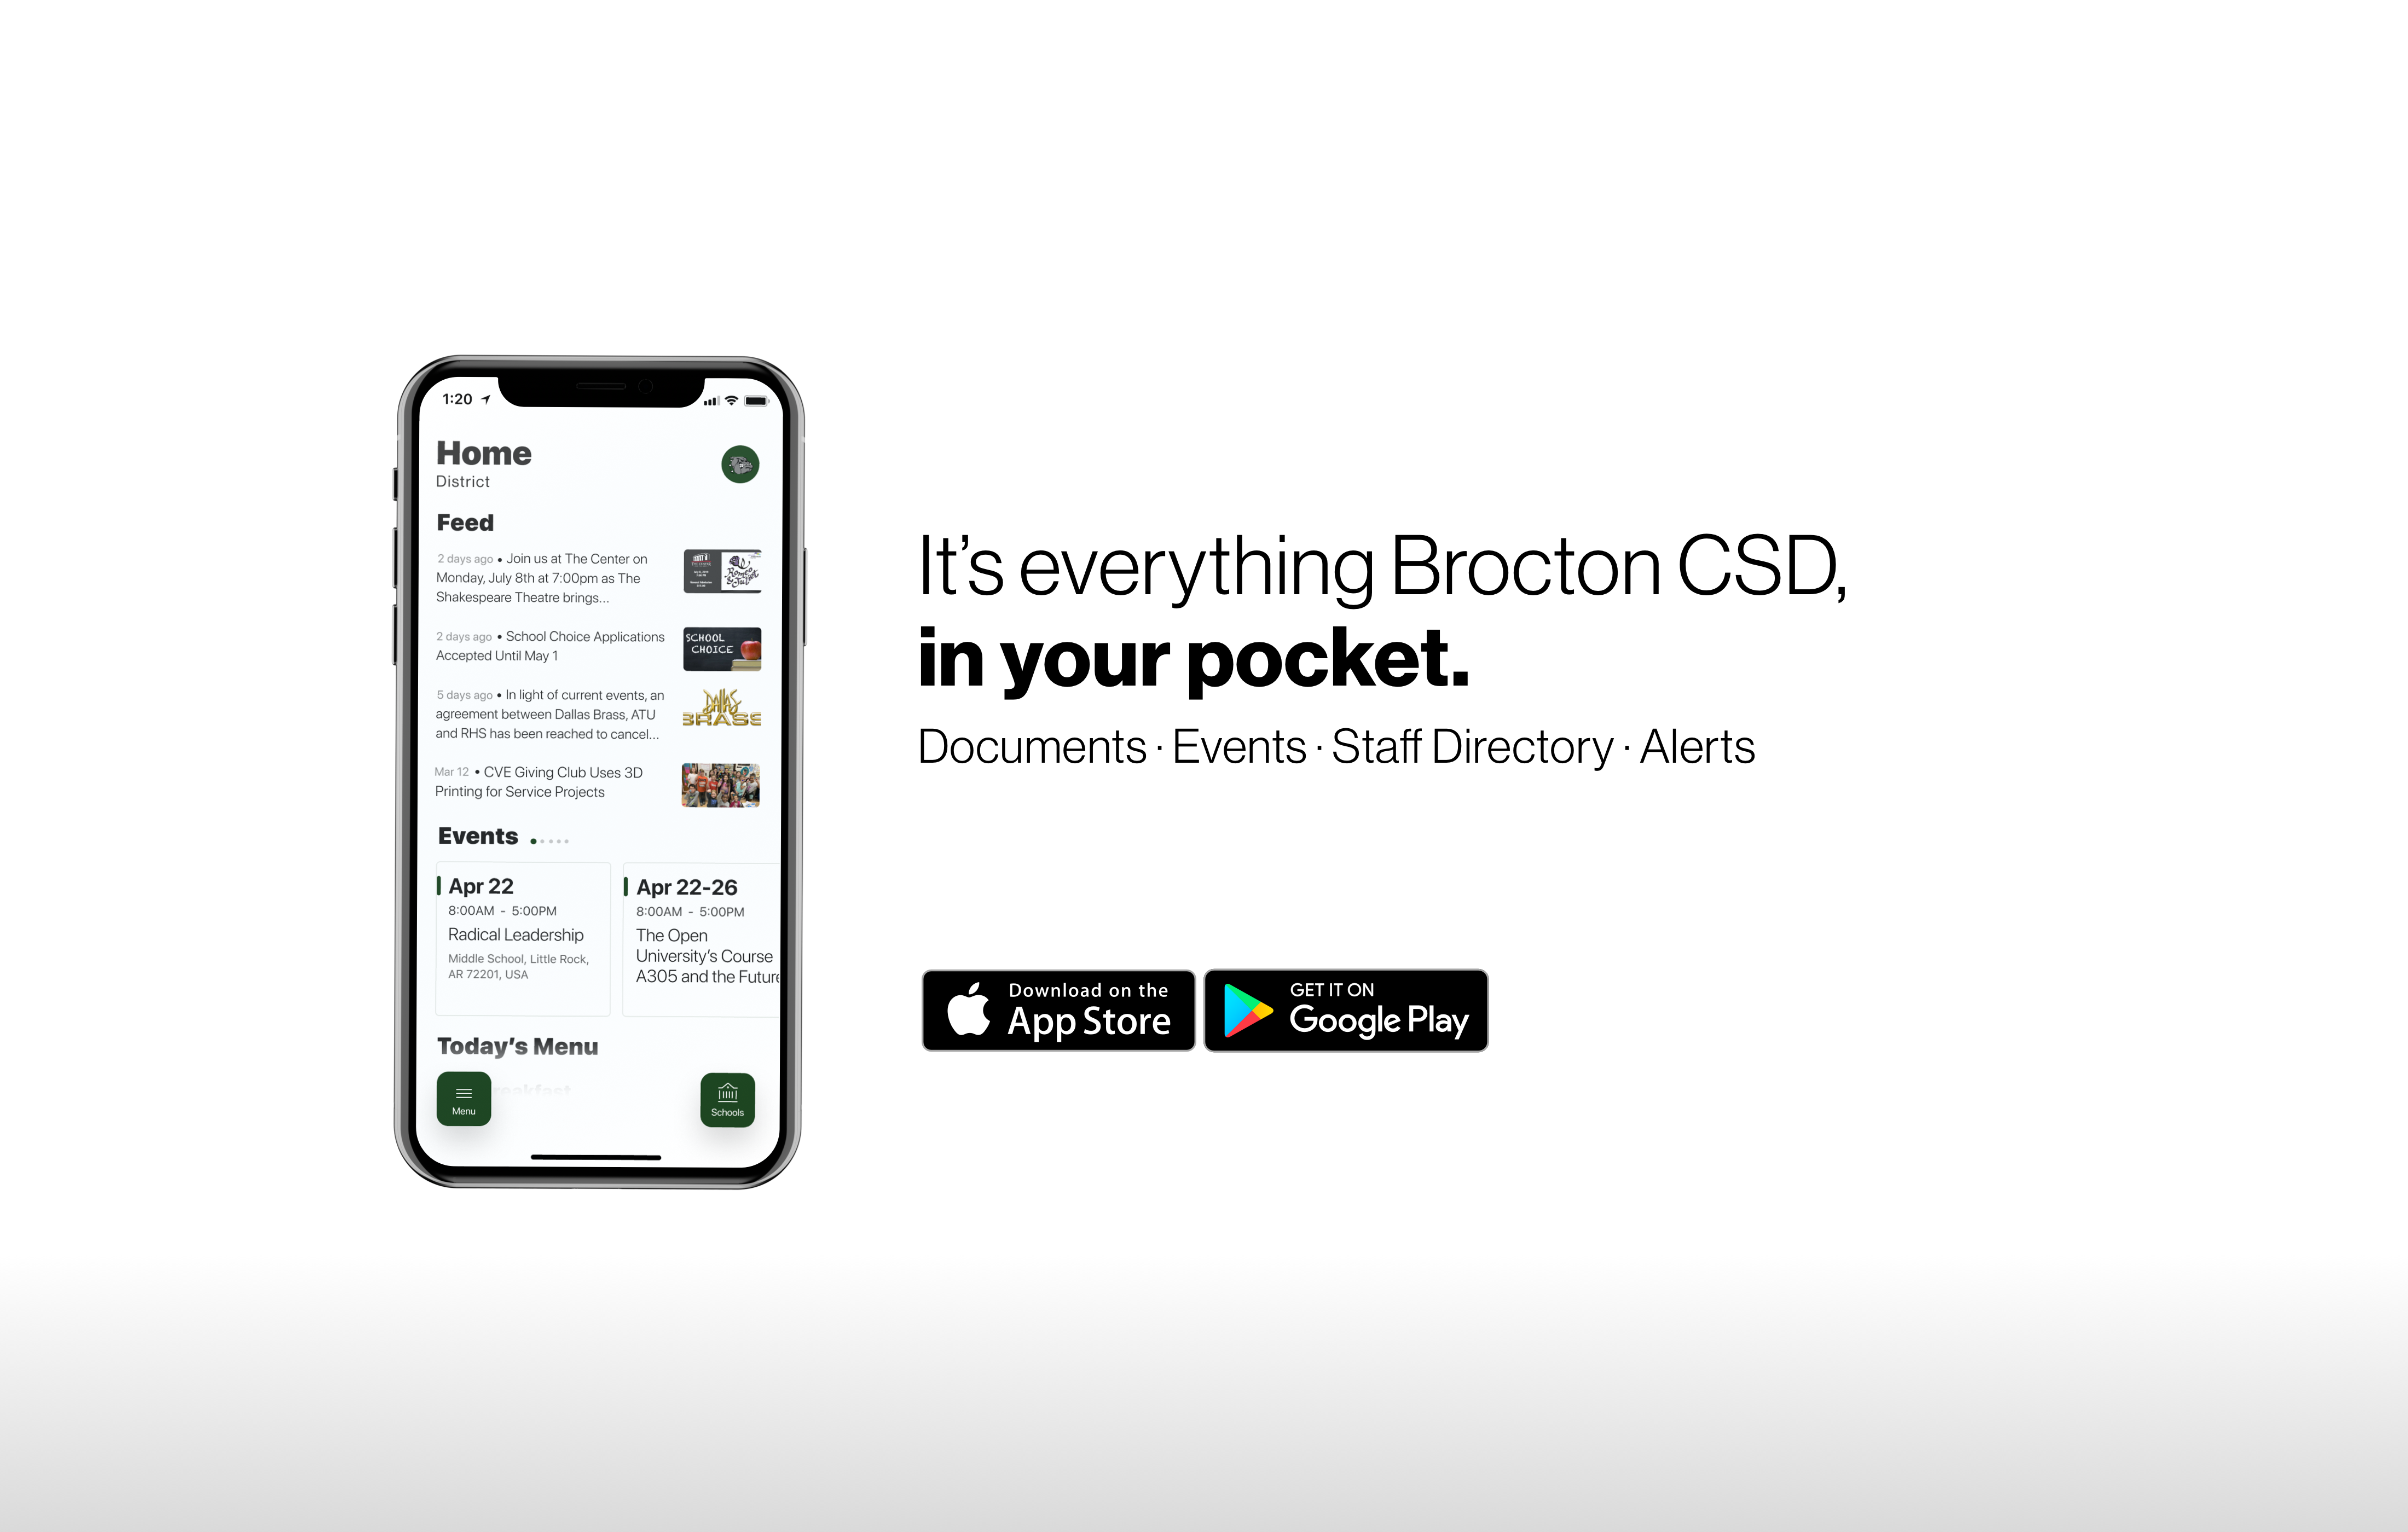 Brocton CSD App Banner